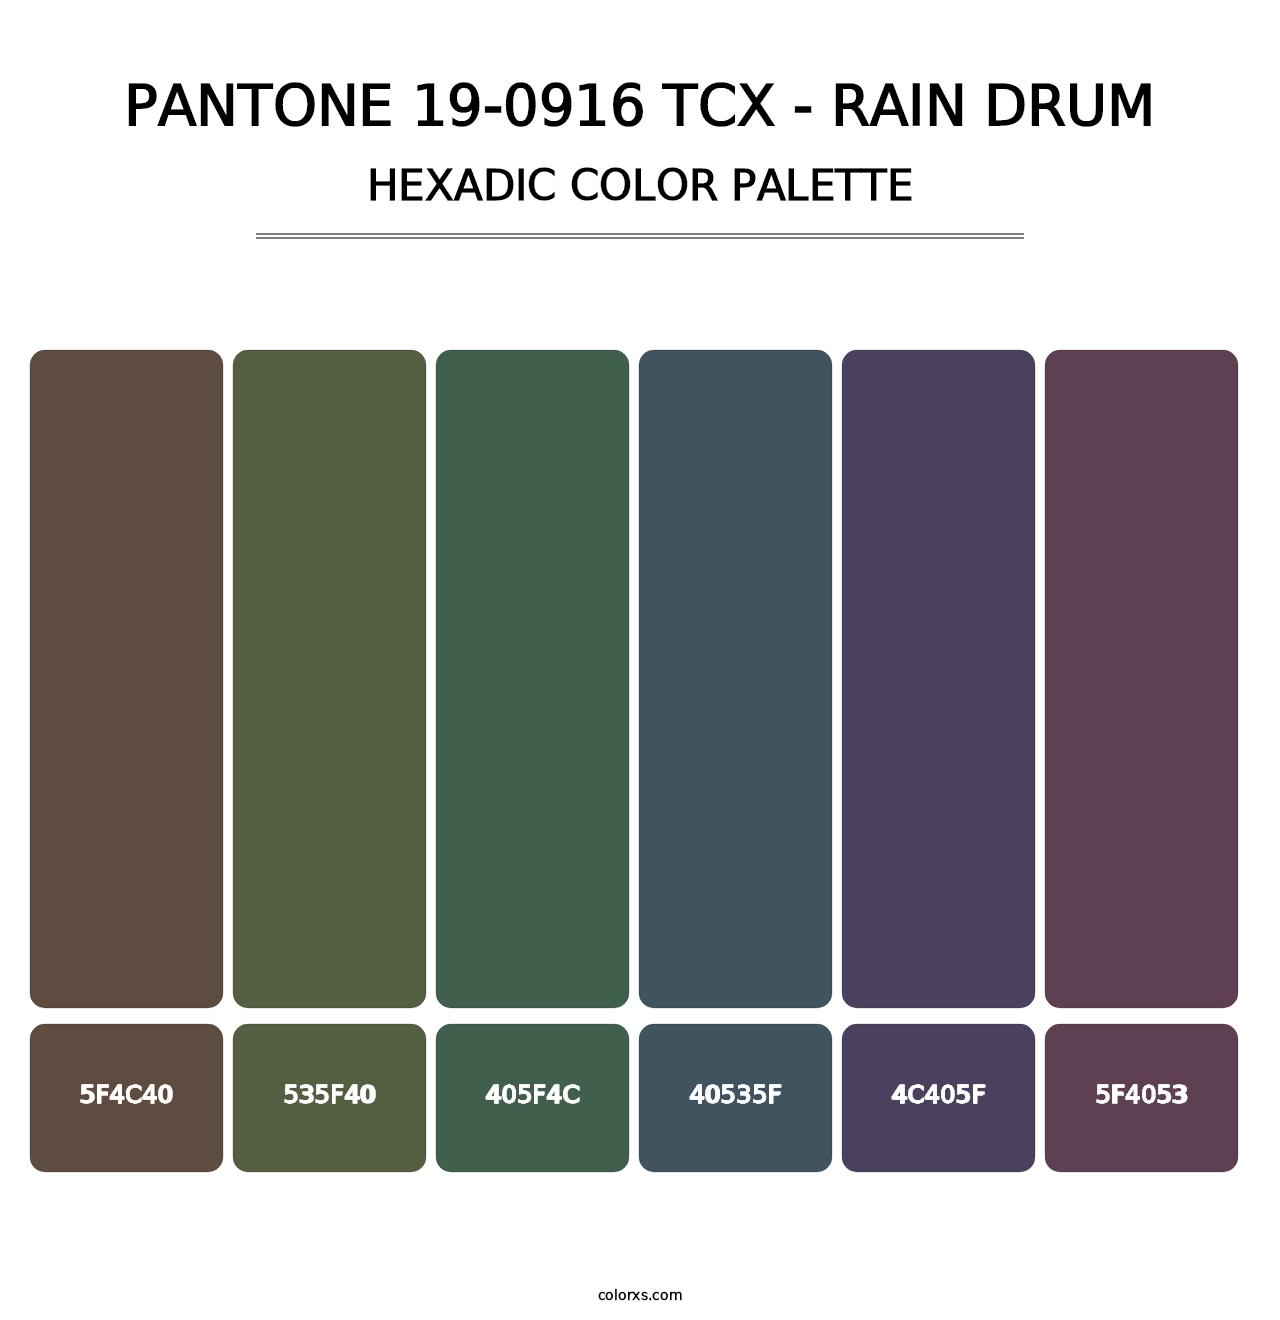 PANTONE 19-0916 TCX - Rain Drum - Hexadic Color Palette